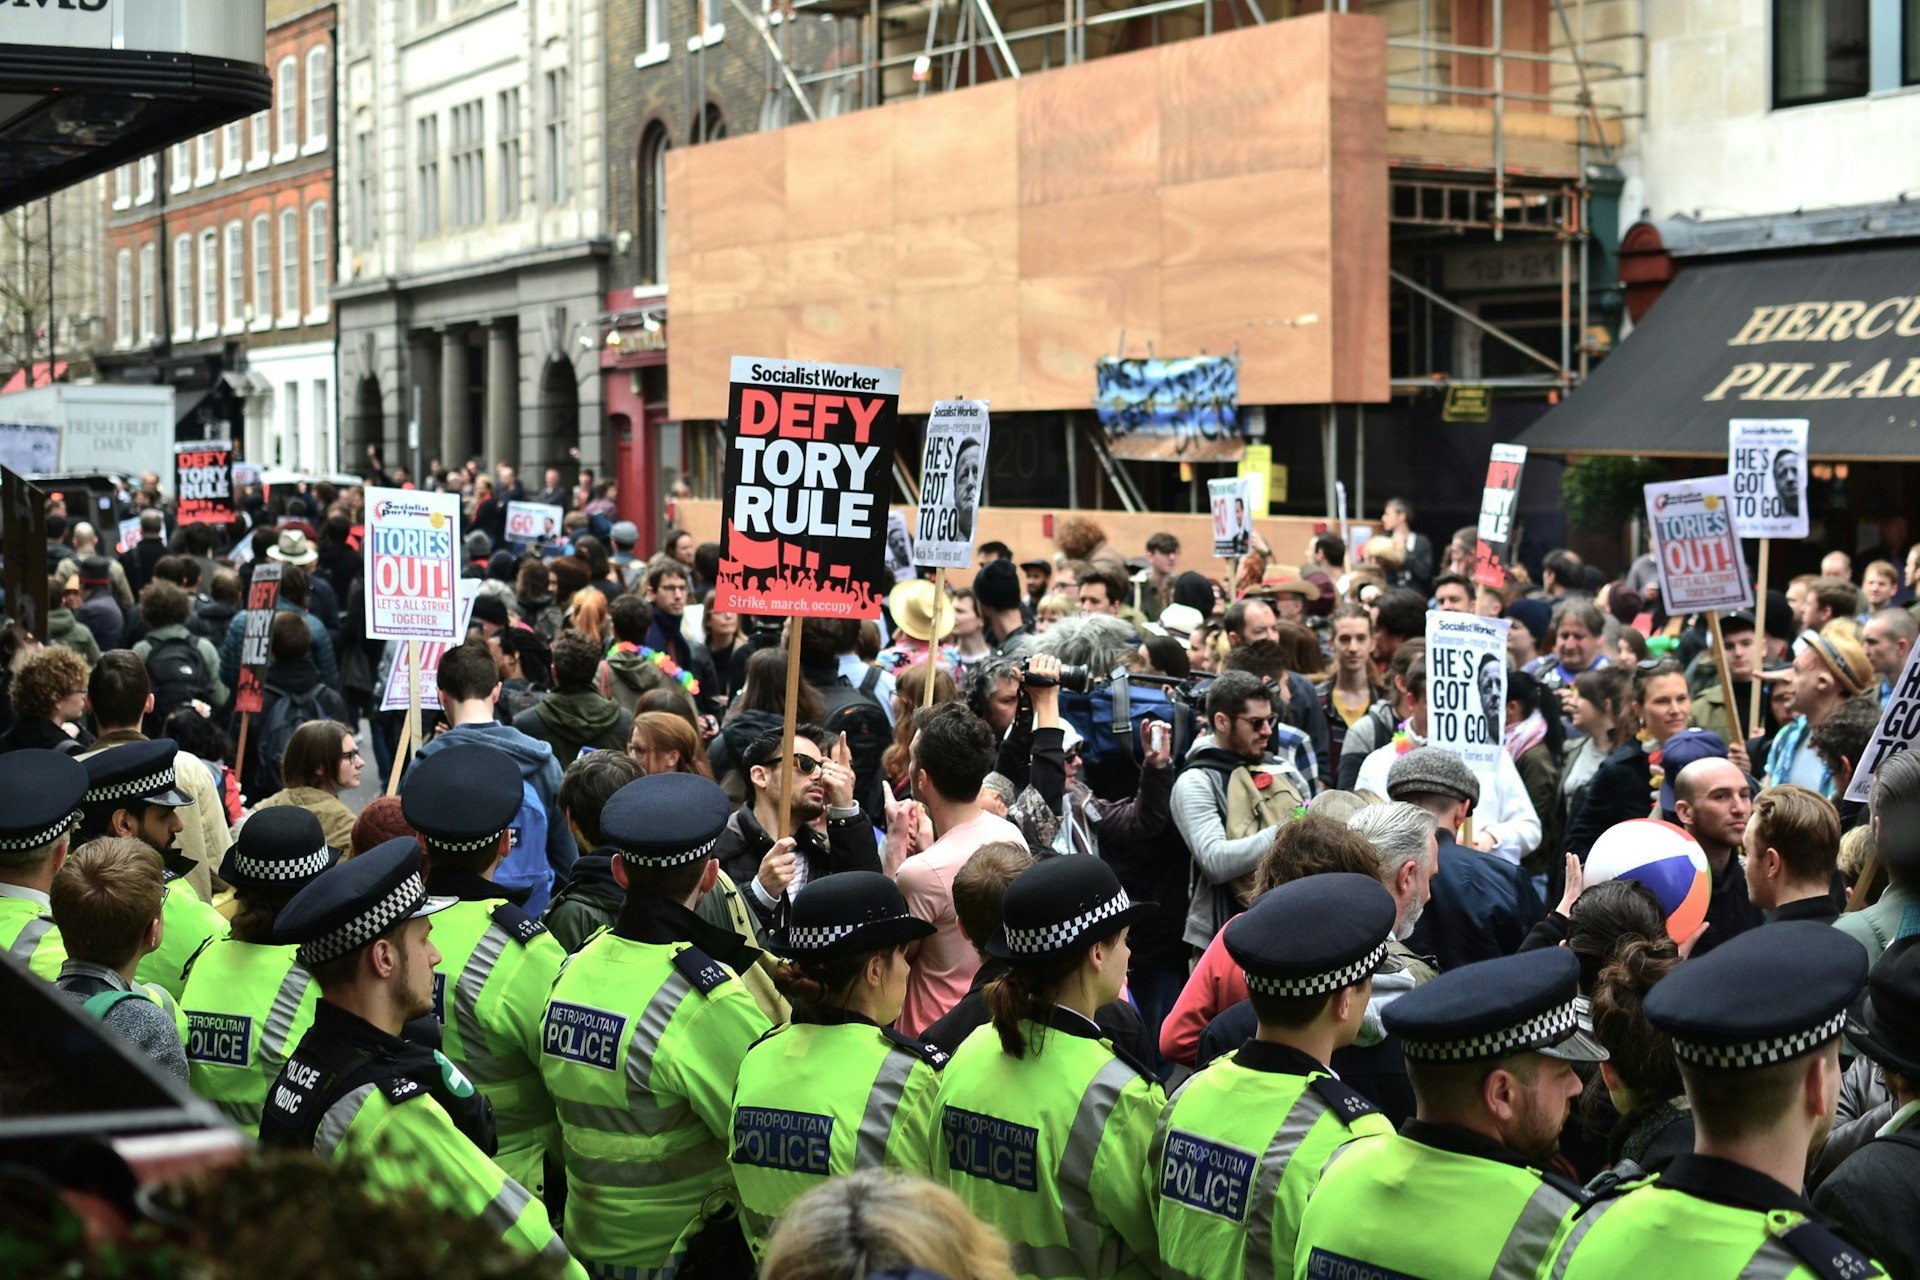 Thousands march through London to demand David Cameron's resignation